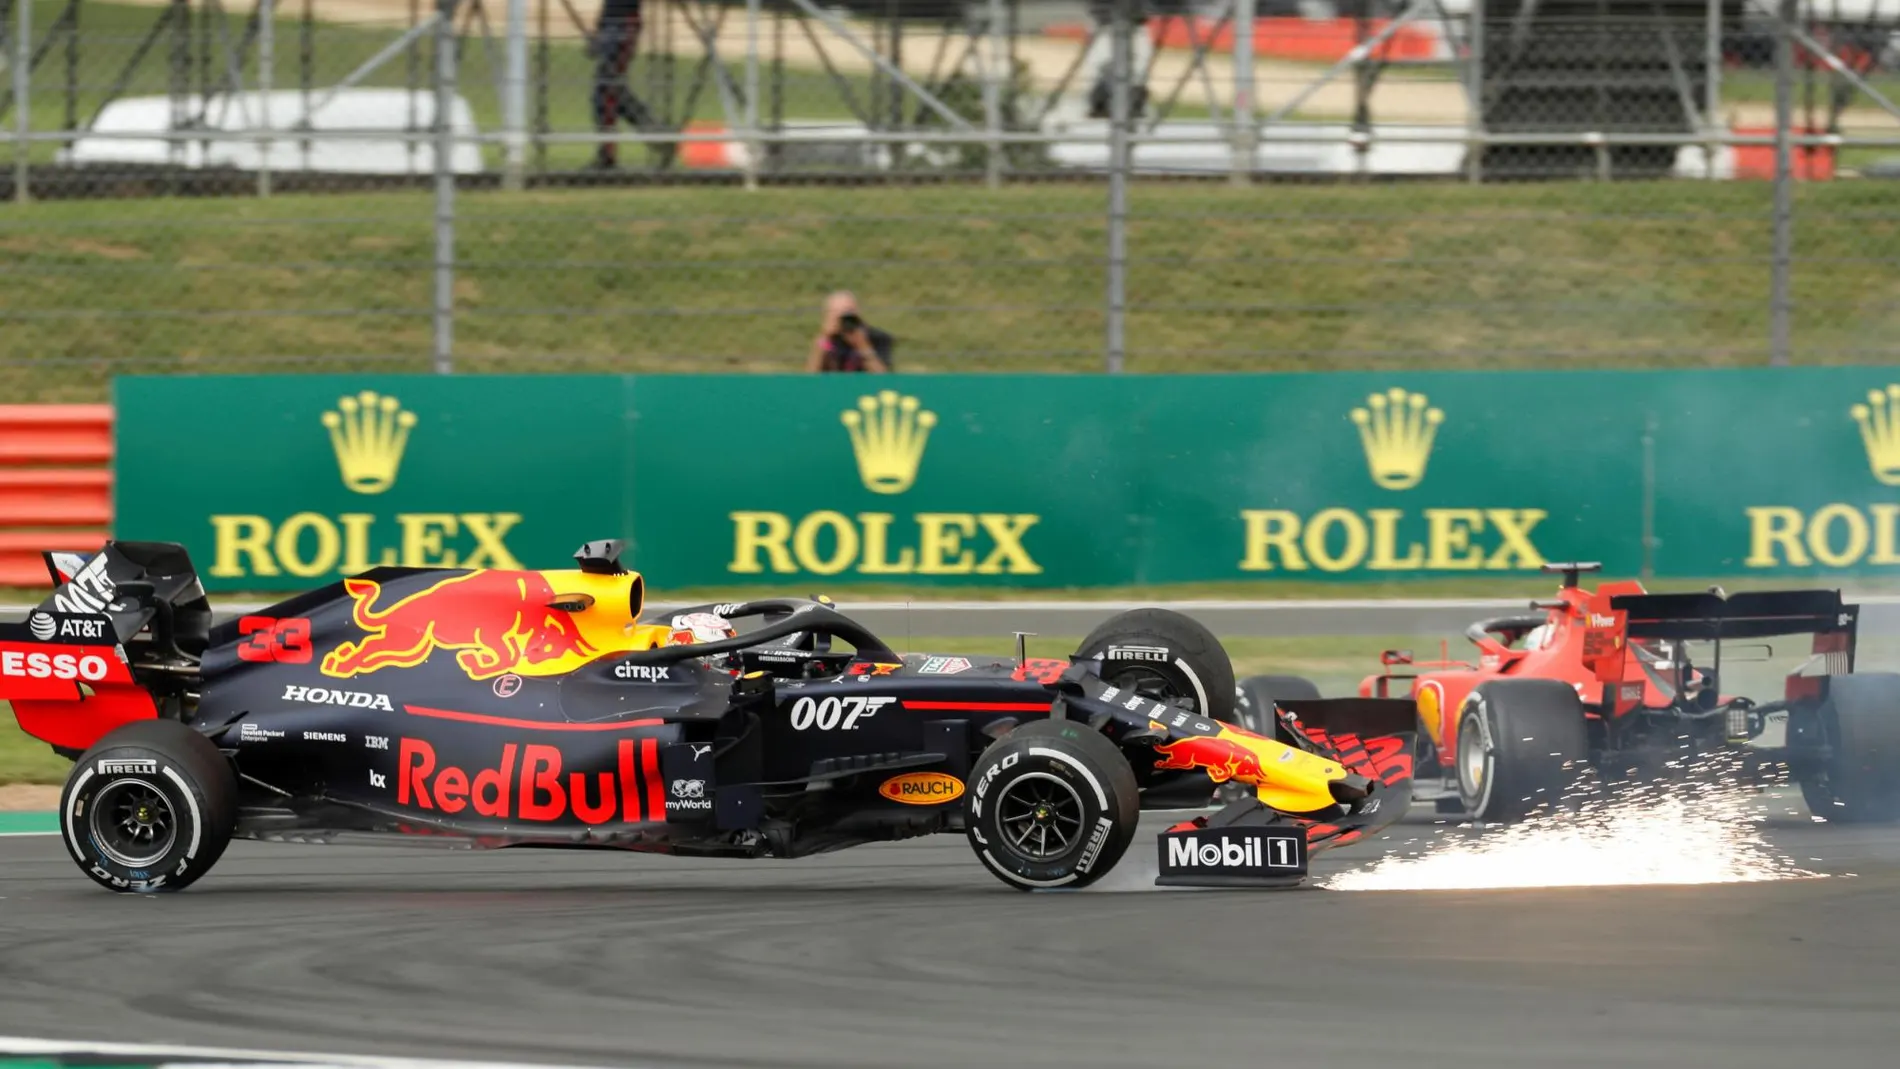 F-1: Hamilton gana y Vettel vuelve a liarla